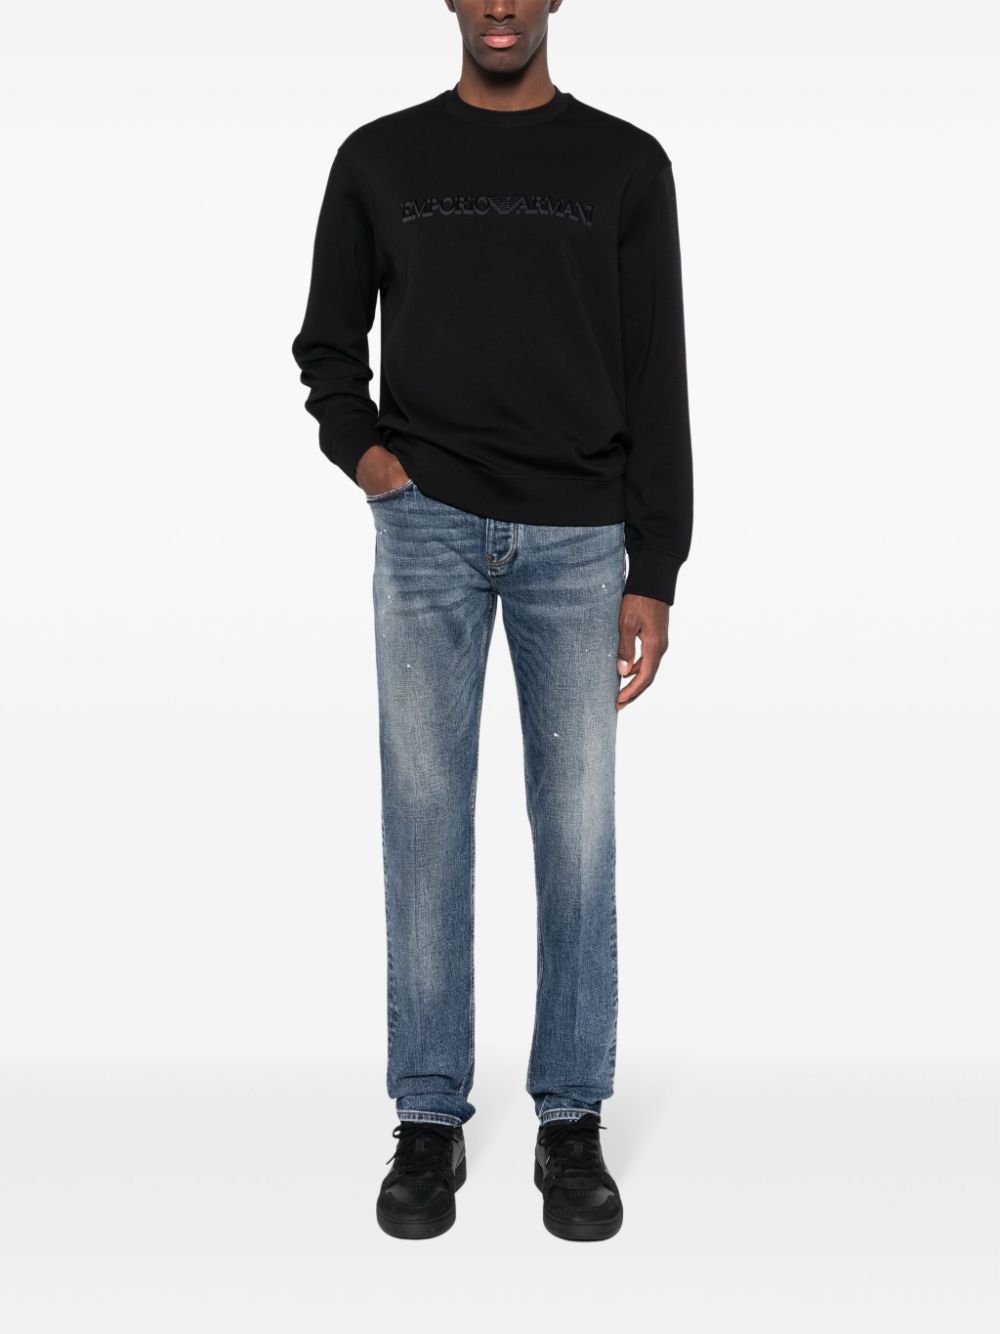 Emporio Armani Sweater met logoprint - Zwart